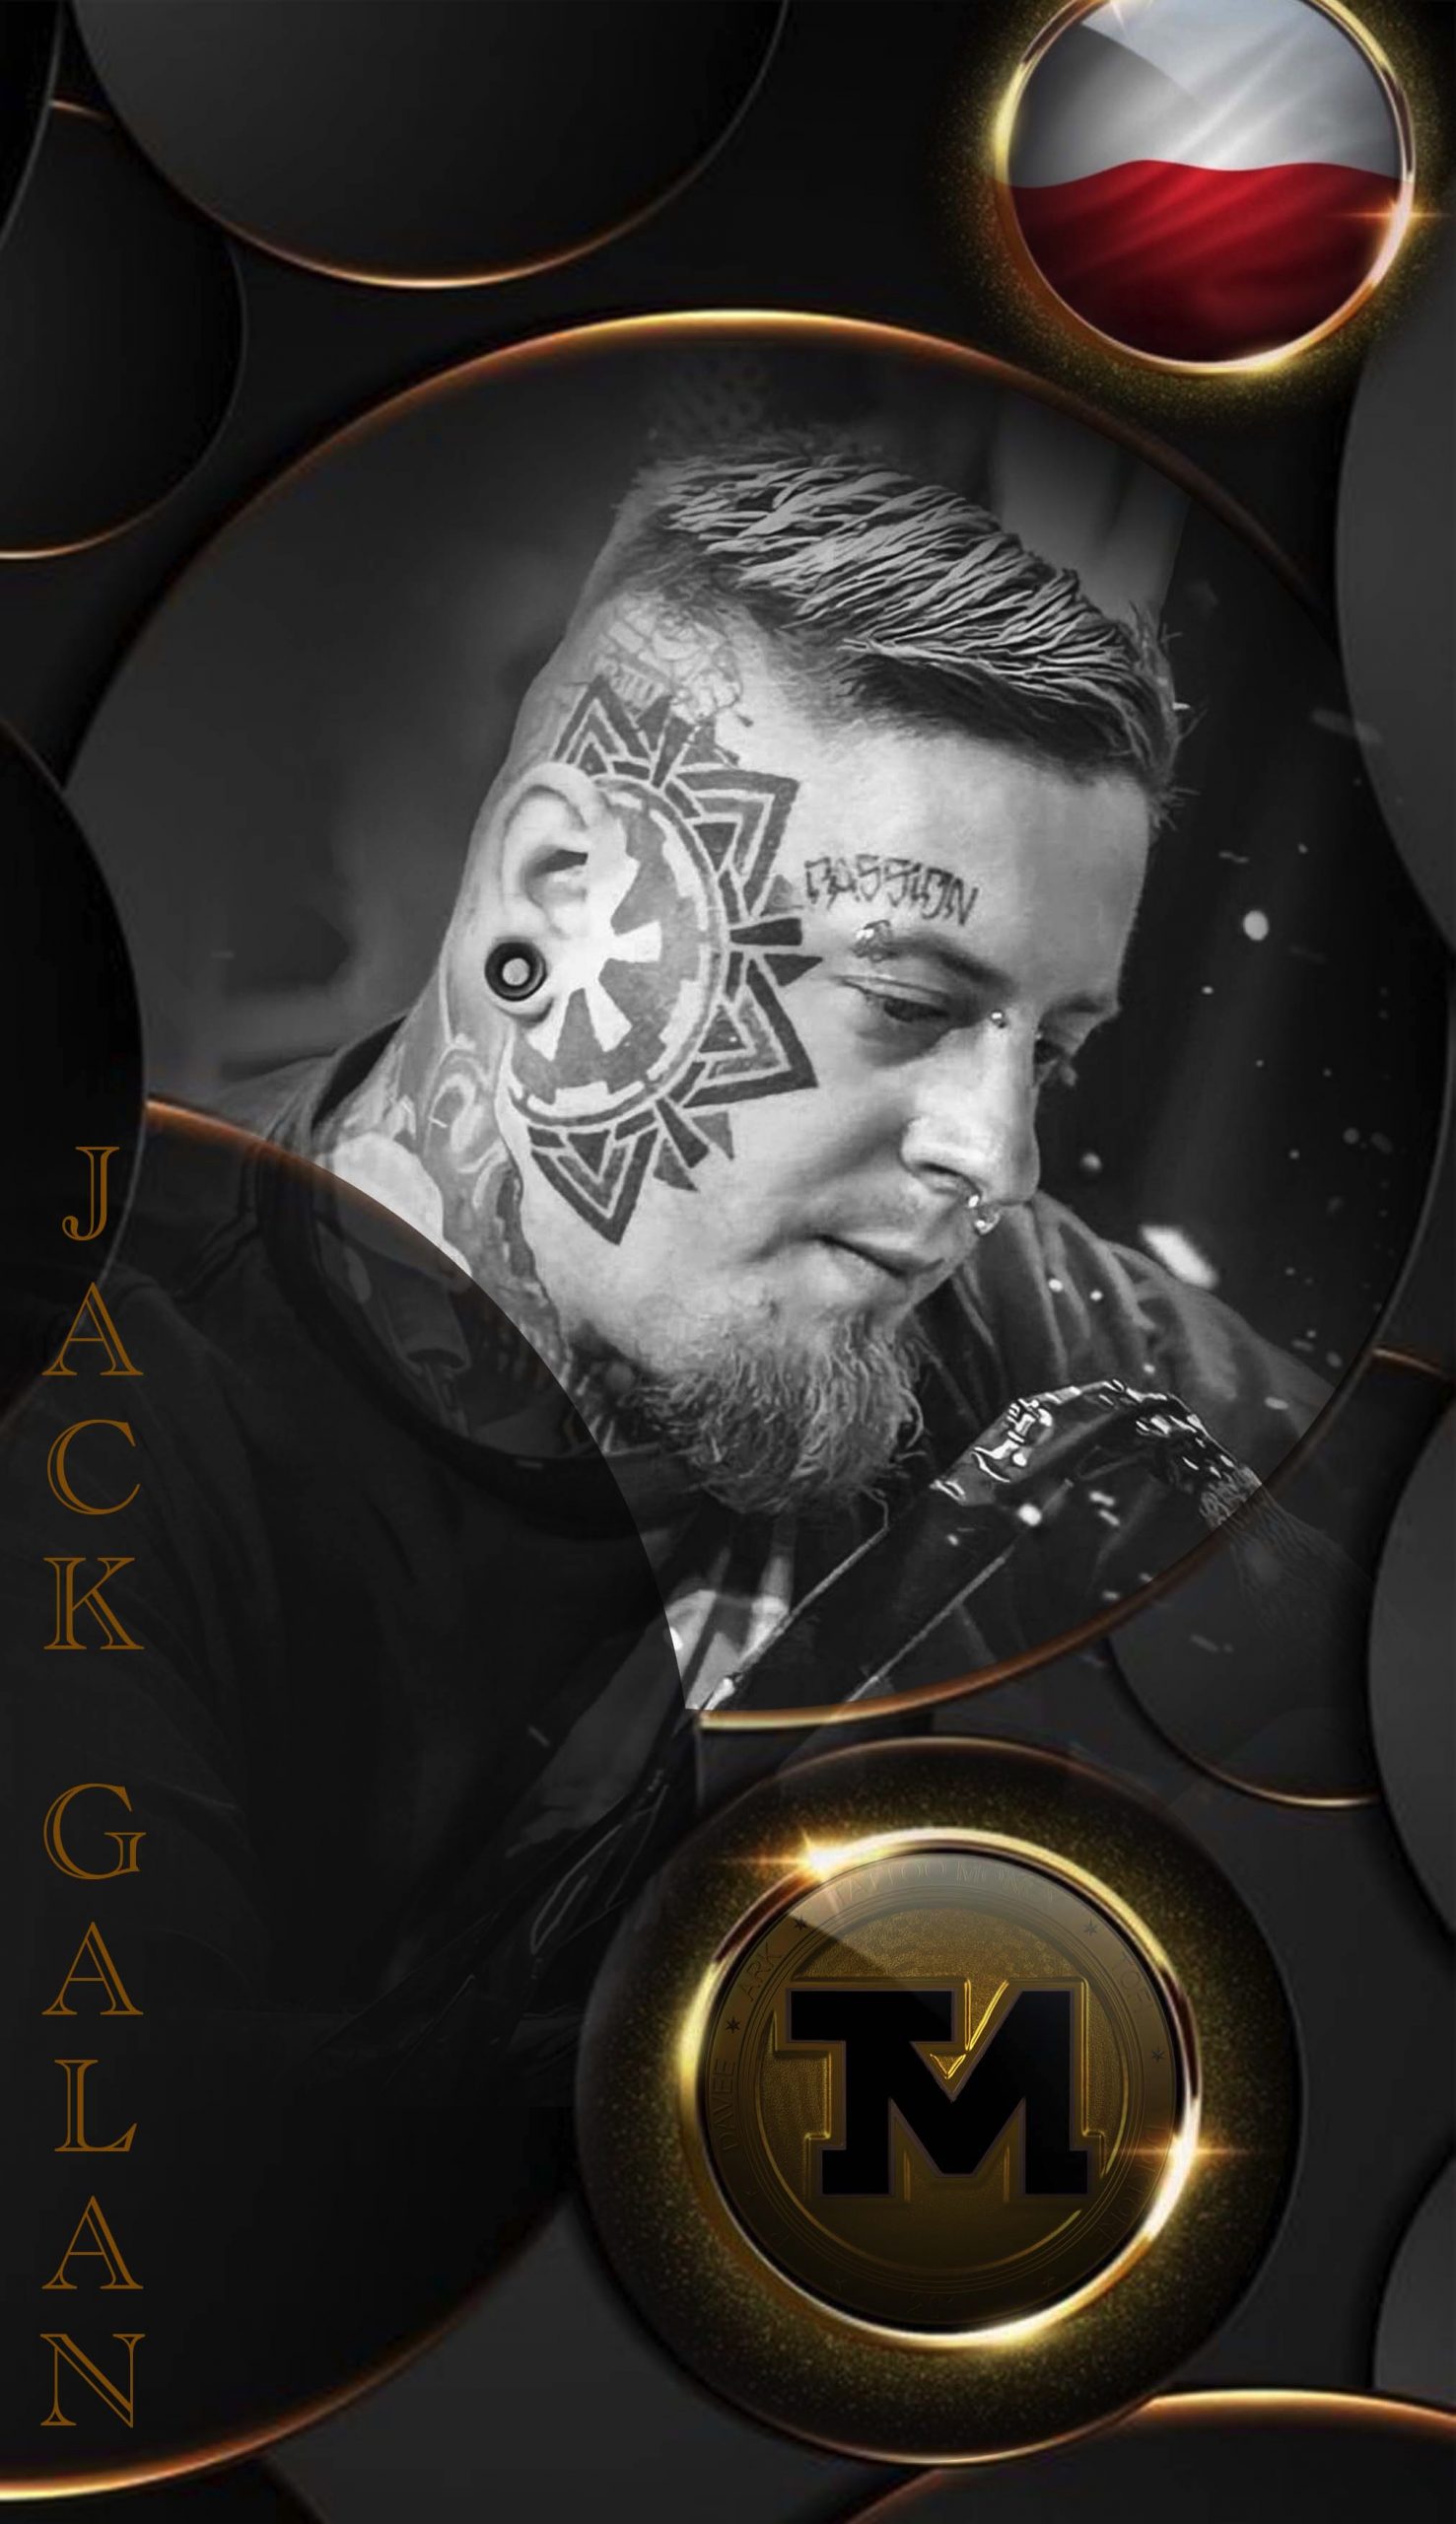 Jack Galan - Owner and Tattoo Artist at Jack Galan’s Art - Szczecin (Poland)